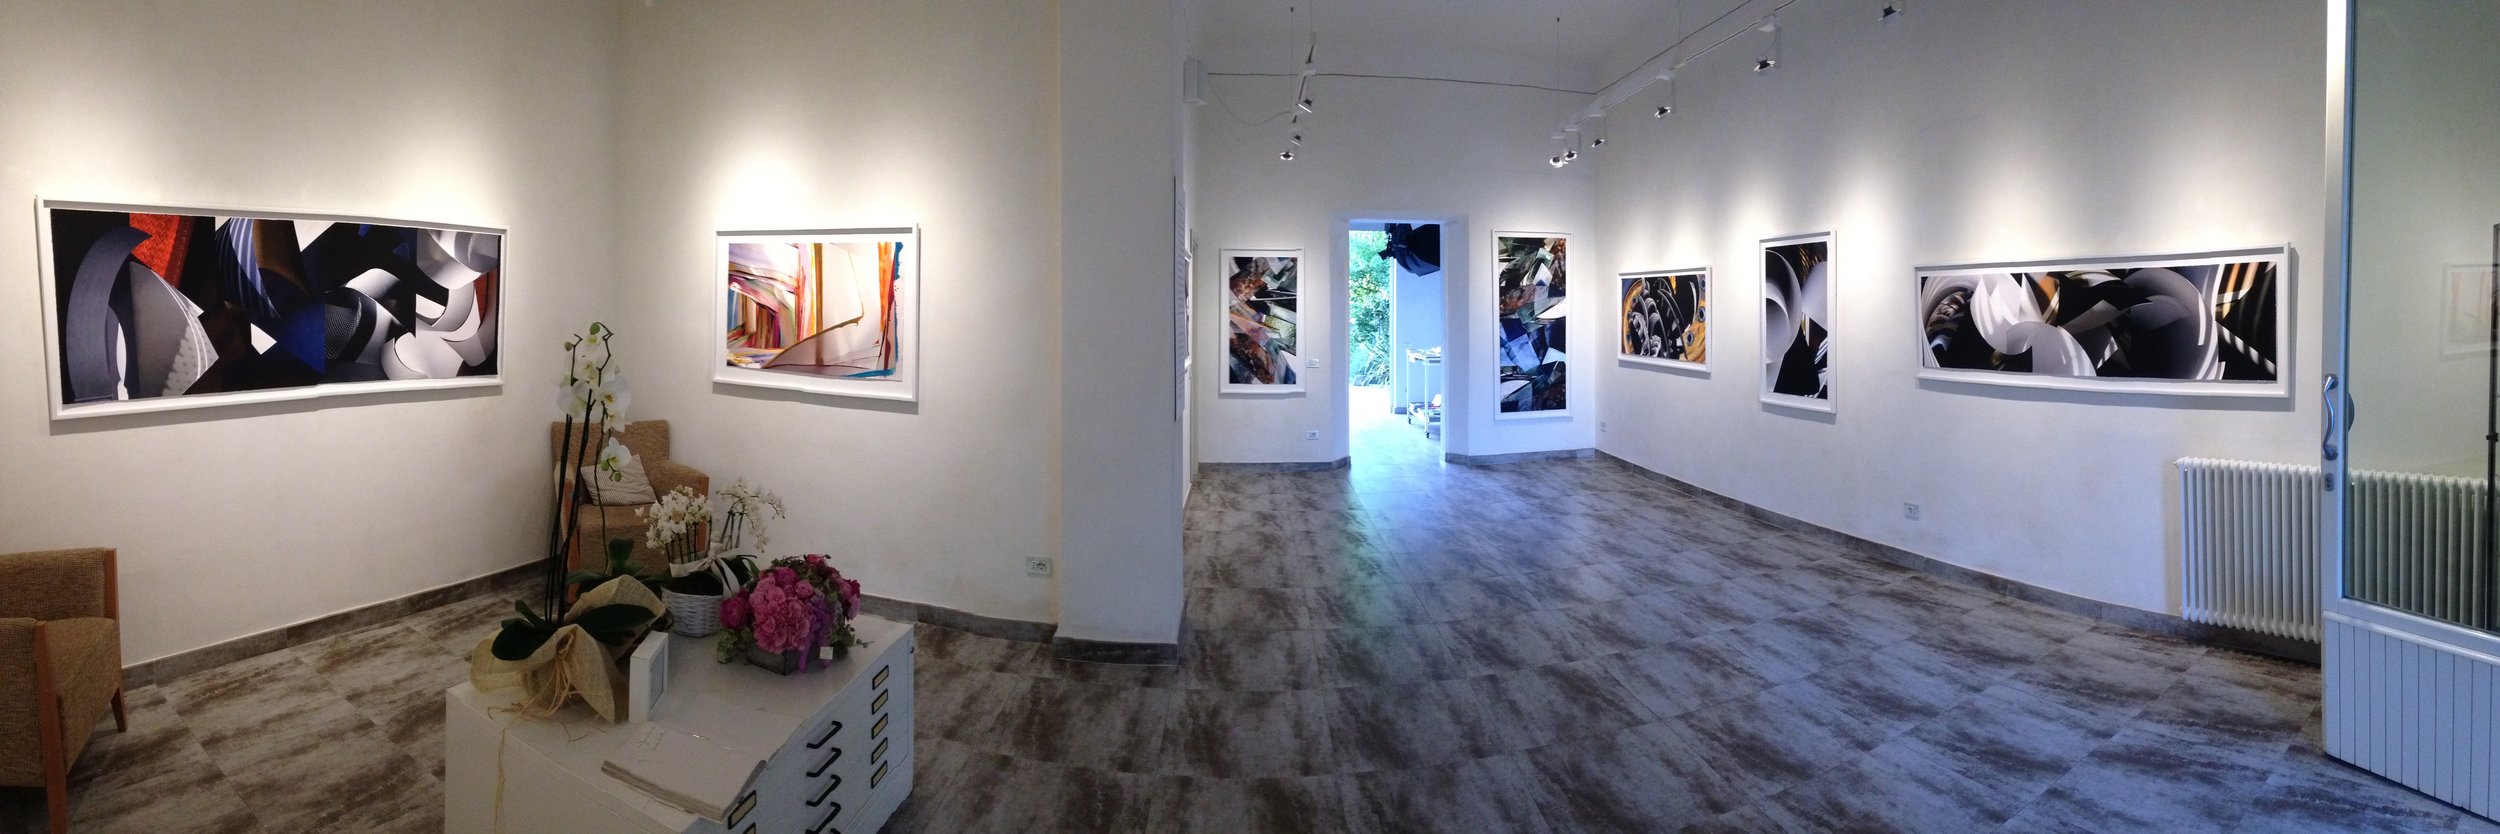 Galeria La Bottega, Pietrasanta, Italy, 2013 Janice Mehlman %22Transcending Illusion%22.jpg